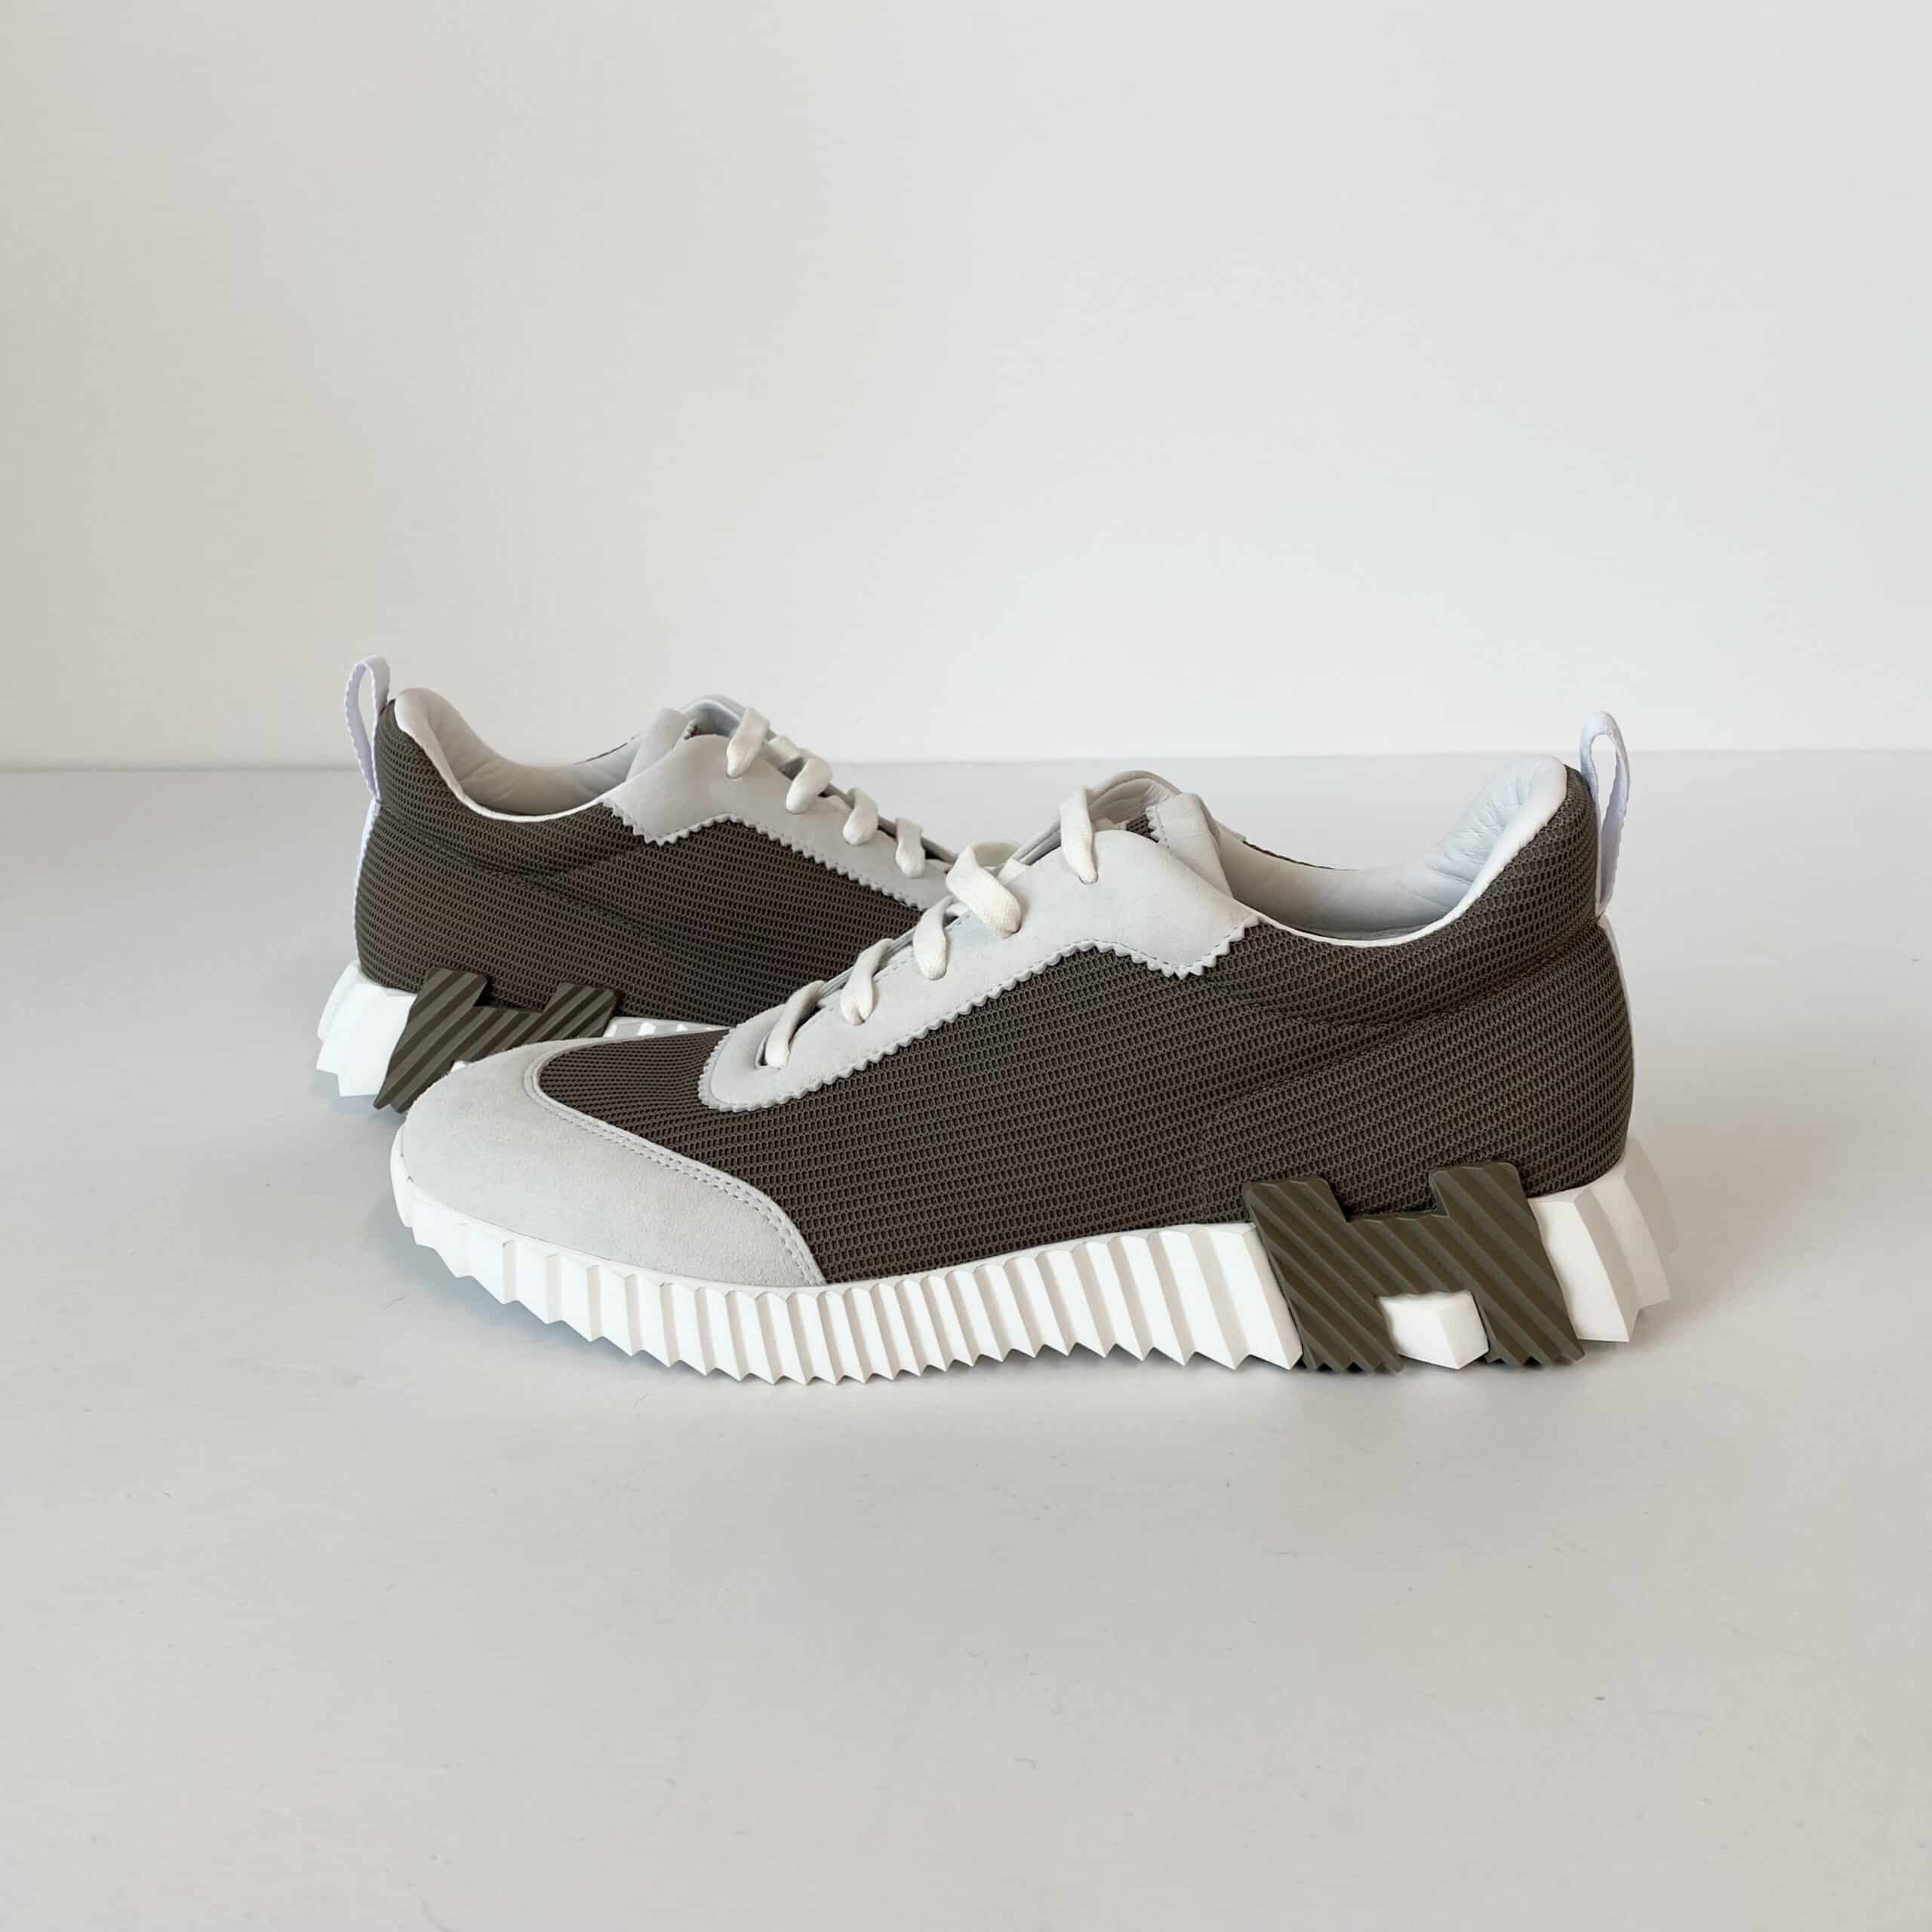 Hermes Bouncing Sneakers Khaki/White Size 42.5 EU - The Luxury Flavor